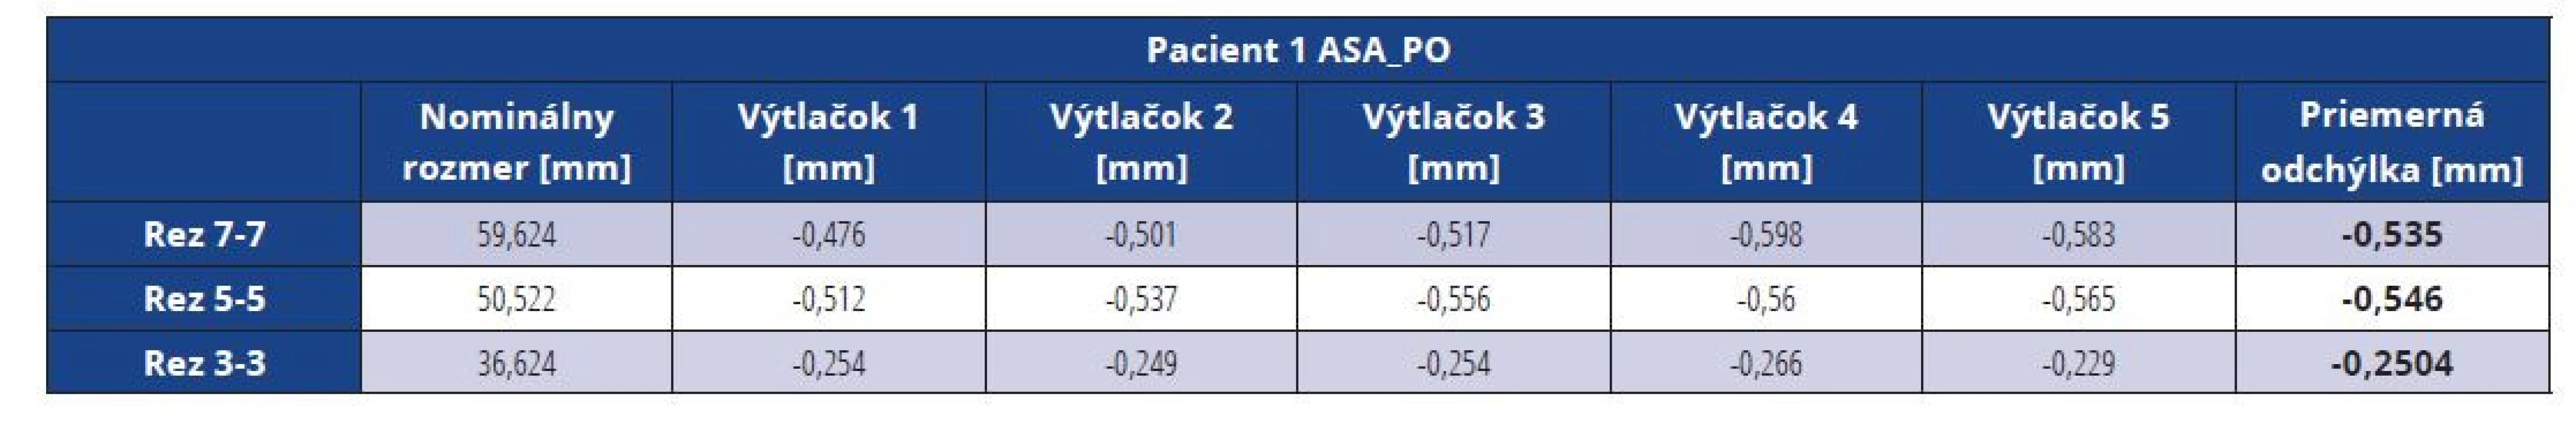 Rozmerové odchýlky master modelu pacienta 1 vytlačeného z materiálu ASA po vákuovaní<br>
Tab. 4 Dimensional deviations of the ASA master model after vacuuming (patient 1)